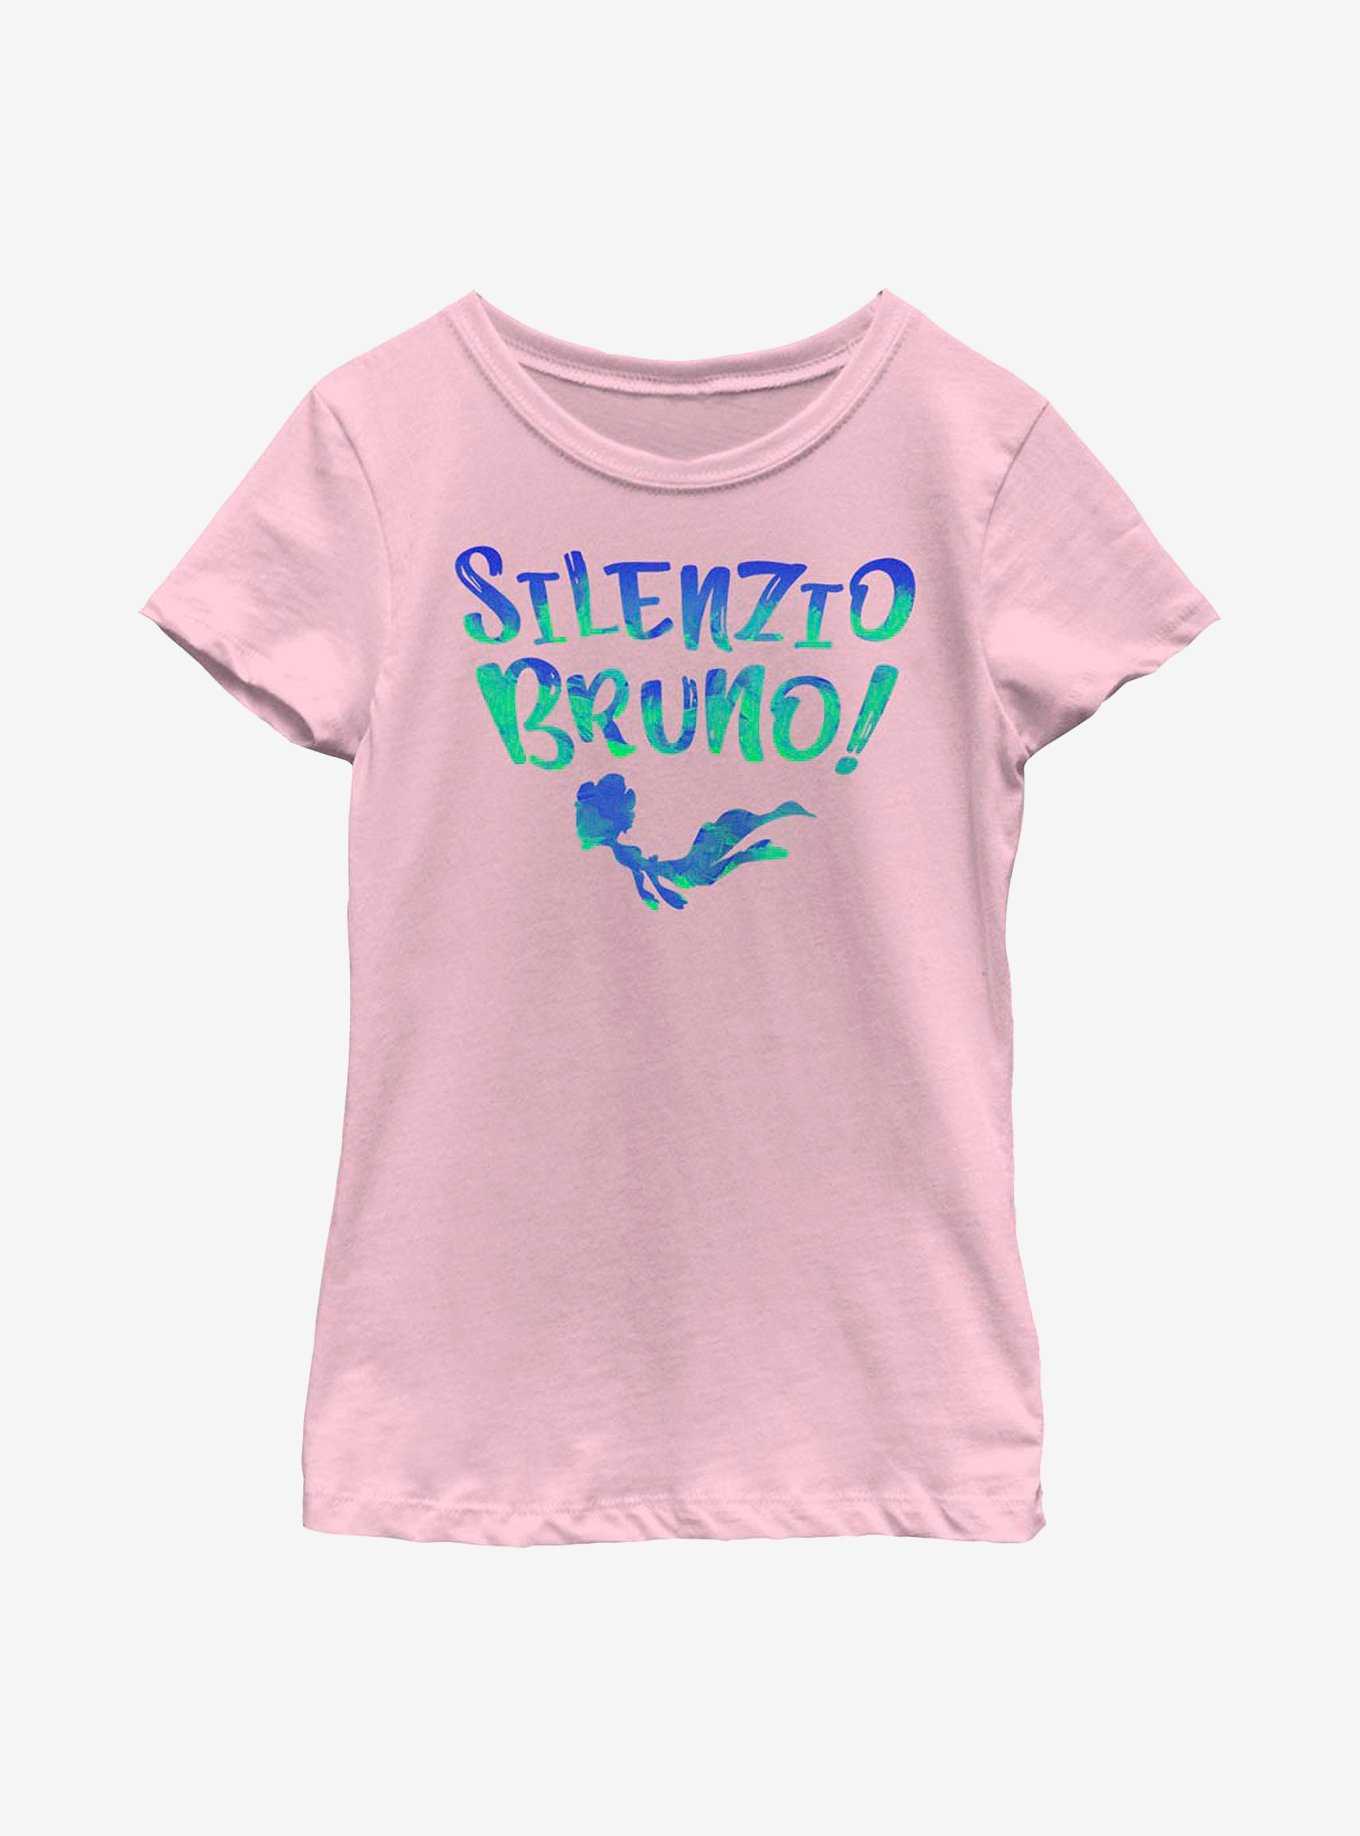 Disney Pixar Silenzio Bruno! Colorful Youth Girls T-Shirt, , hi-res